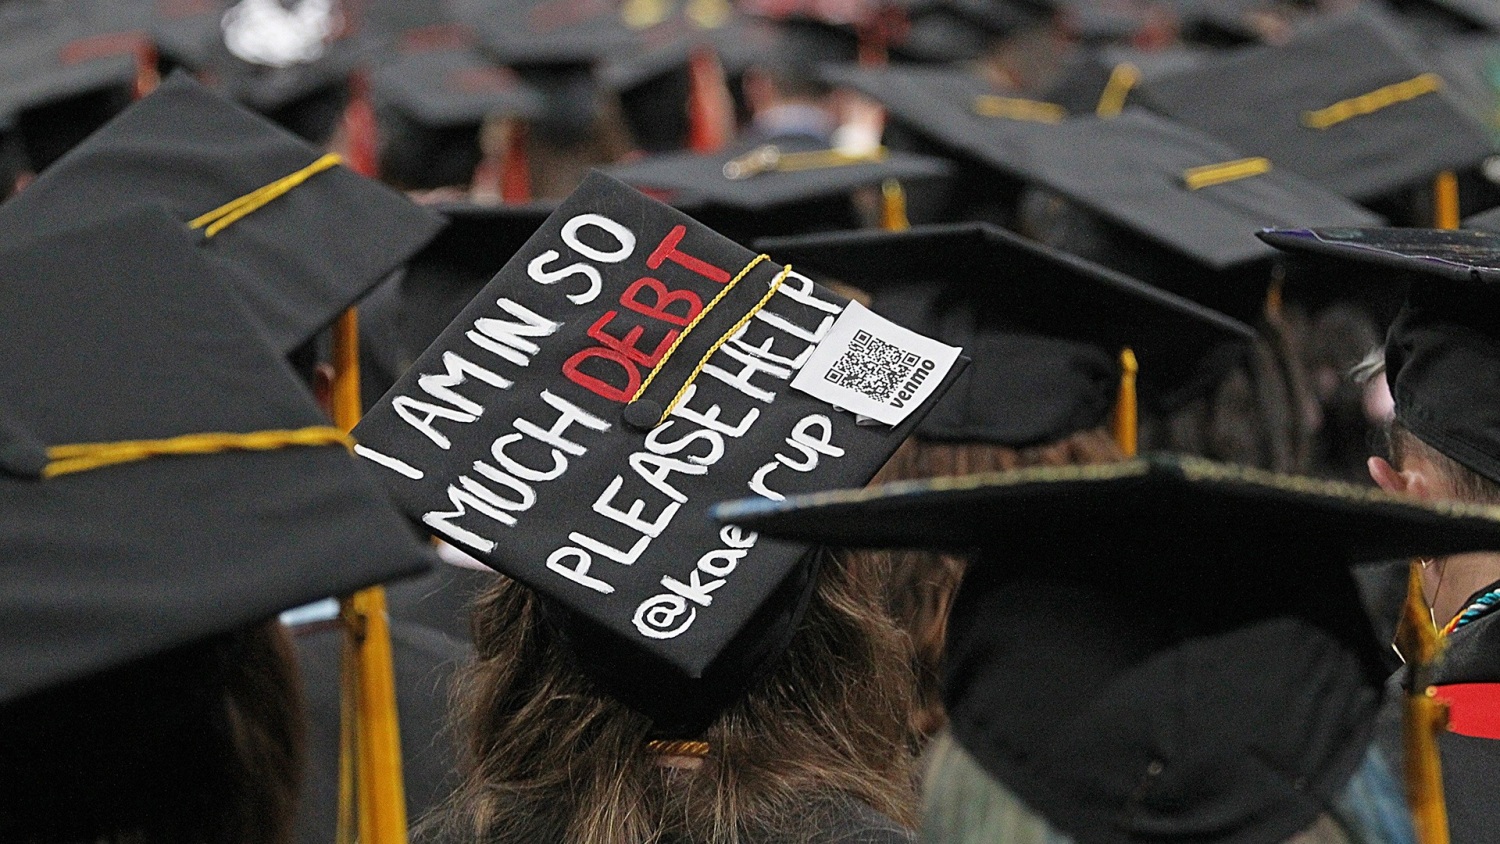 Evan Spiegel and Miranda Kerr Pay Debts of Otis College Graduates